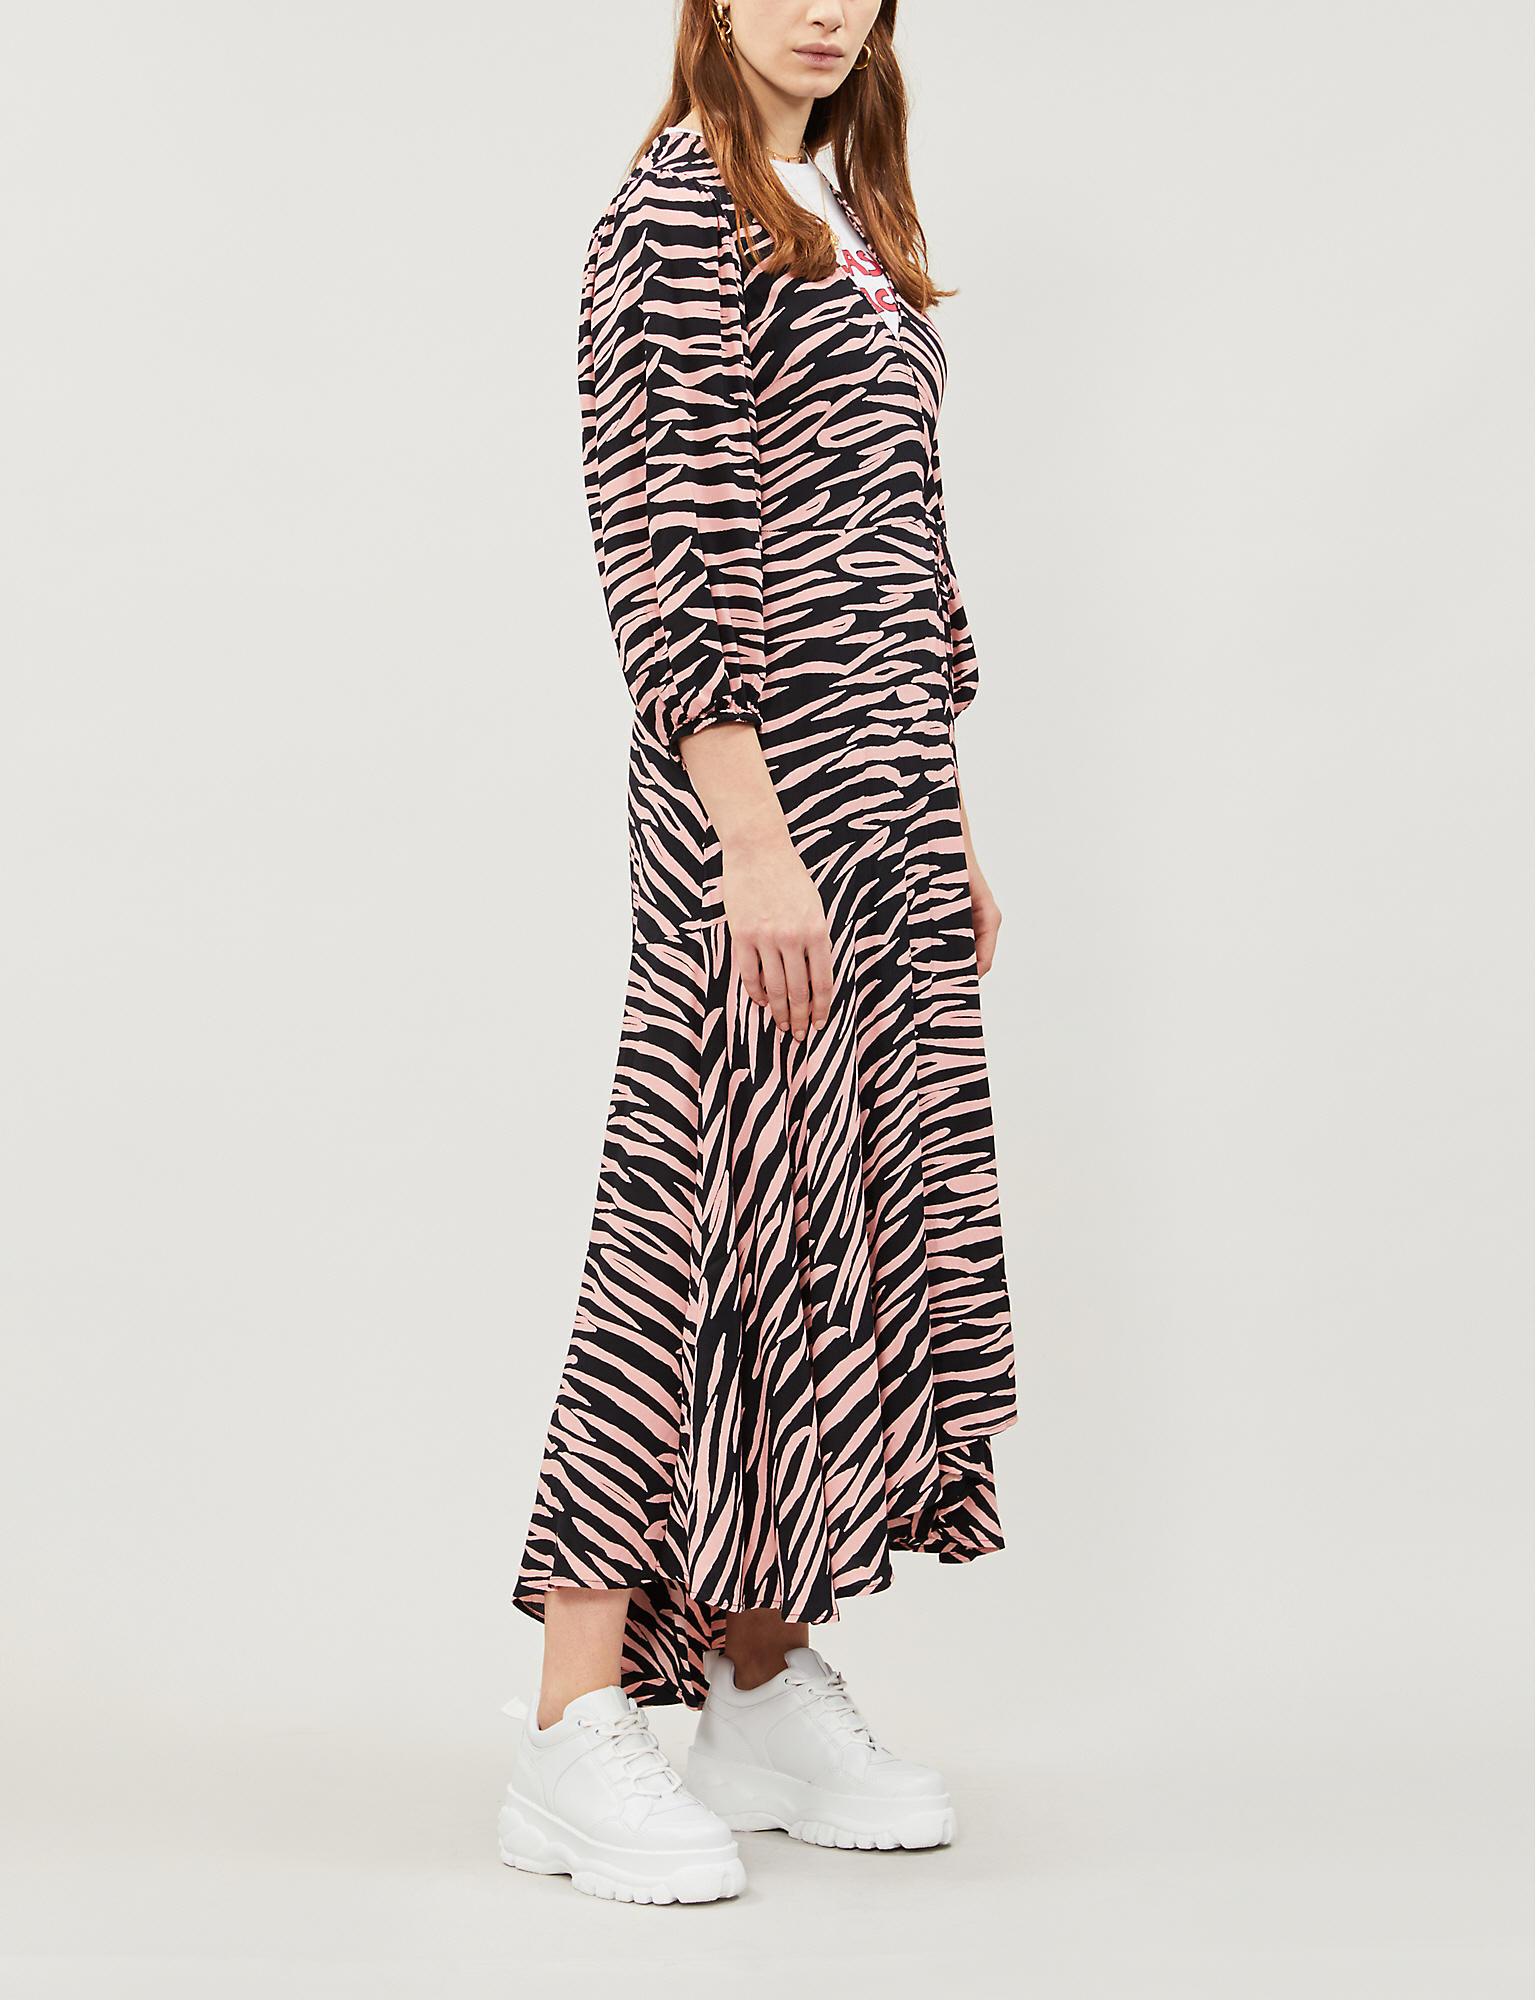 Ganni Zebra Print Wrap Dress in Black | Lyst